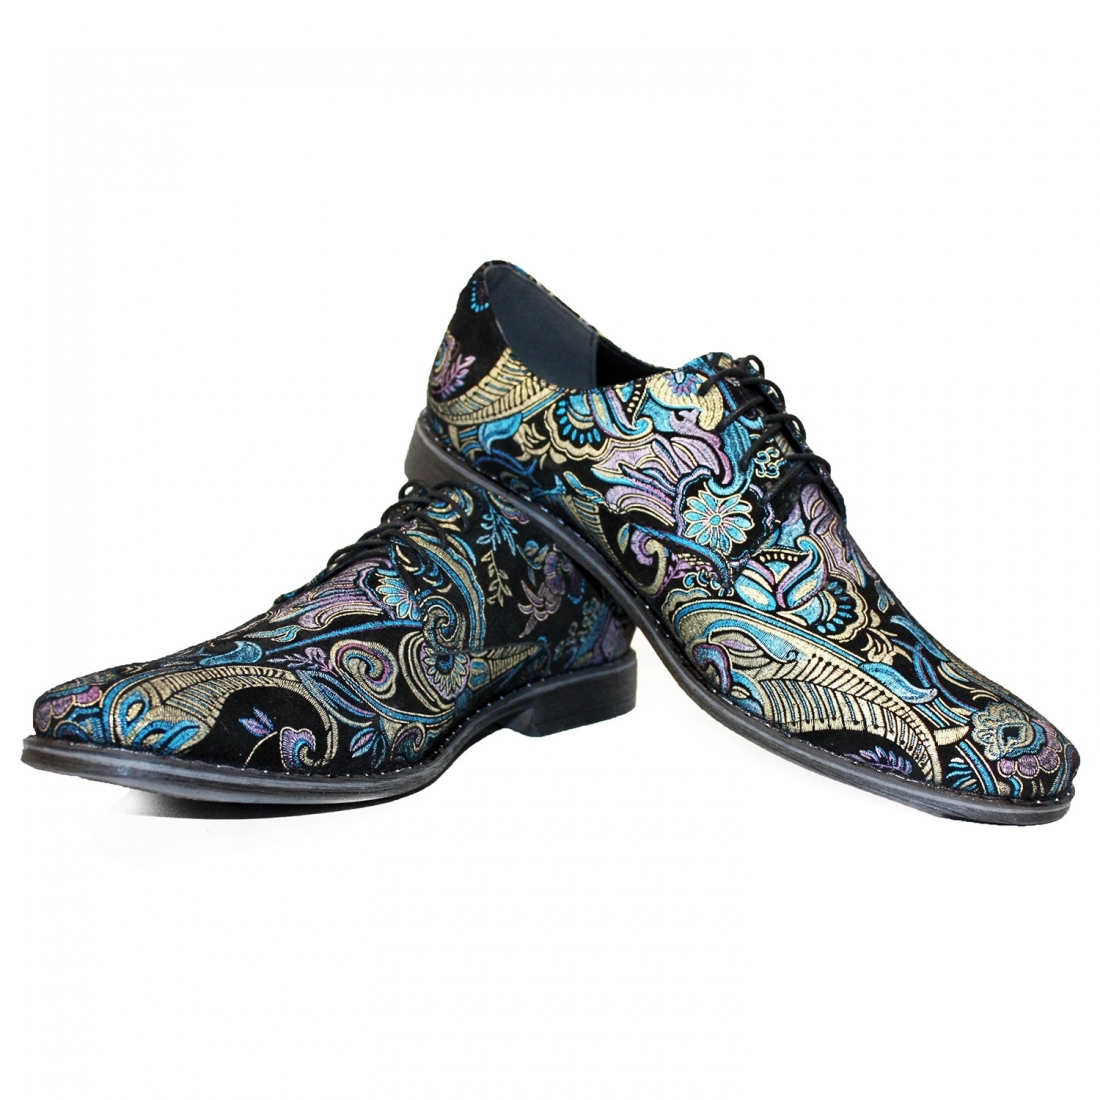 Modello Shpanerro - Zapatos Clásicos - Handmade Colorful Italian Leather Shoes